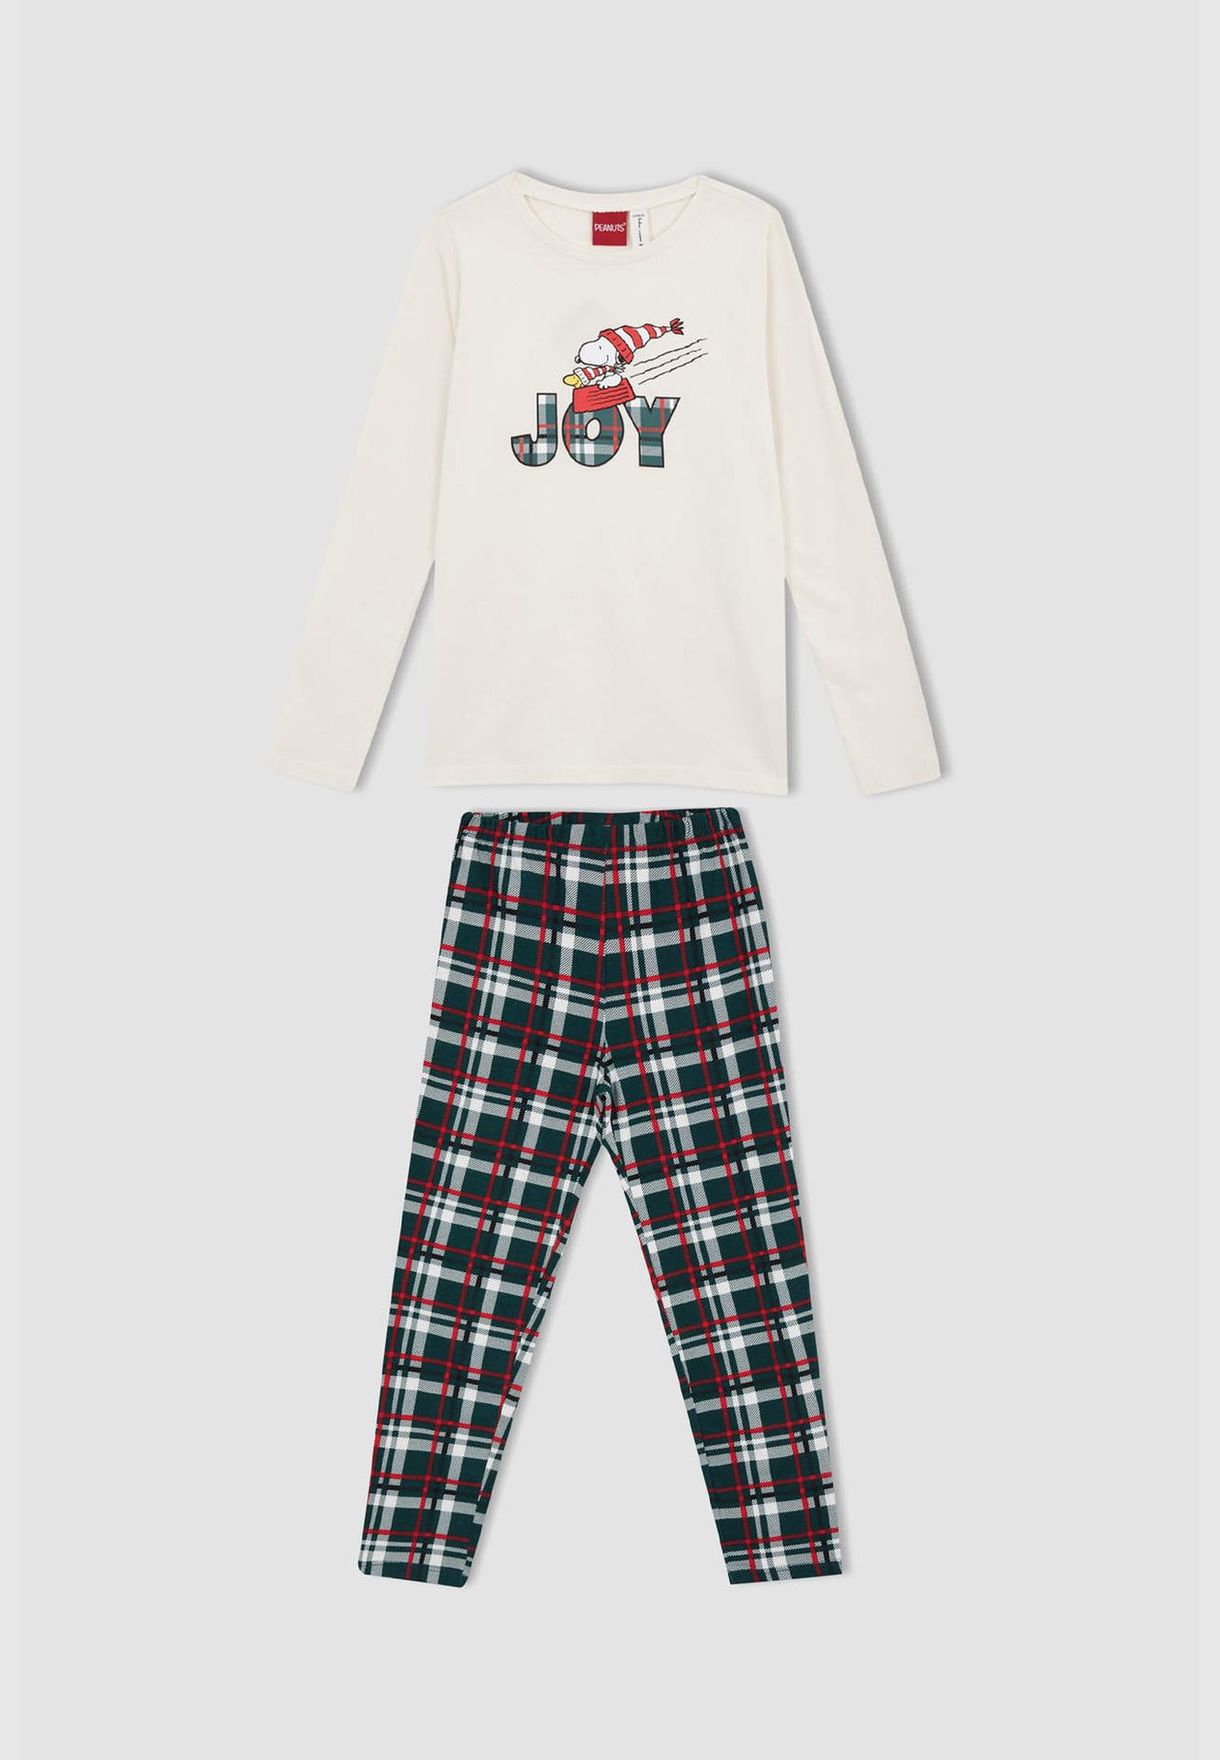 Long Sleeve New Year Themed Snoopy Printed Pyjama Set